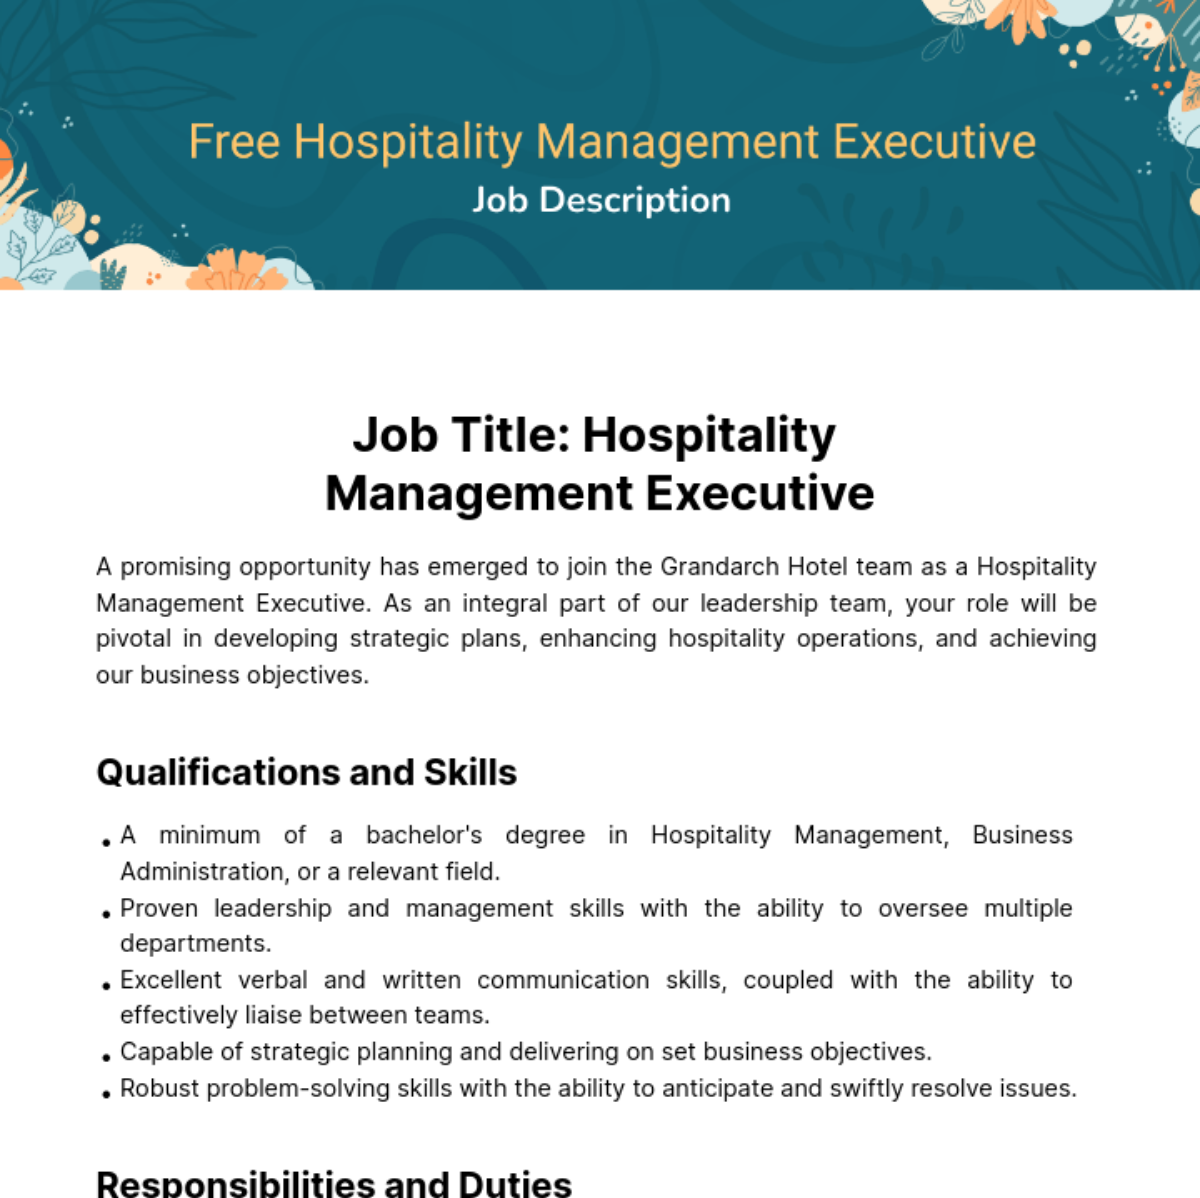 Free Hospitality Management Executive Job Description Template